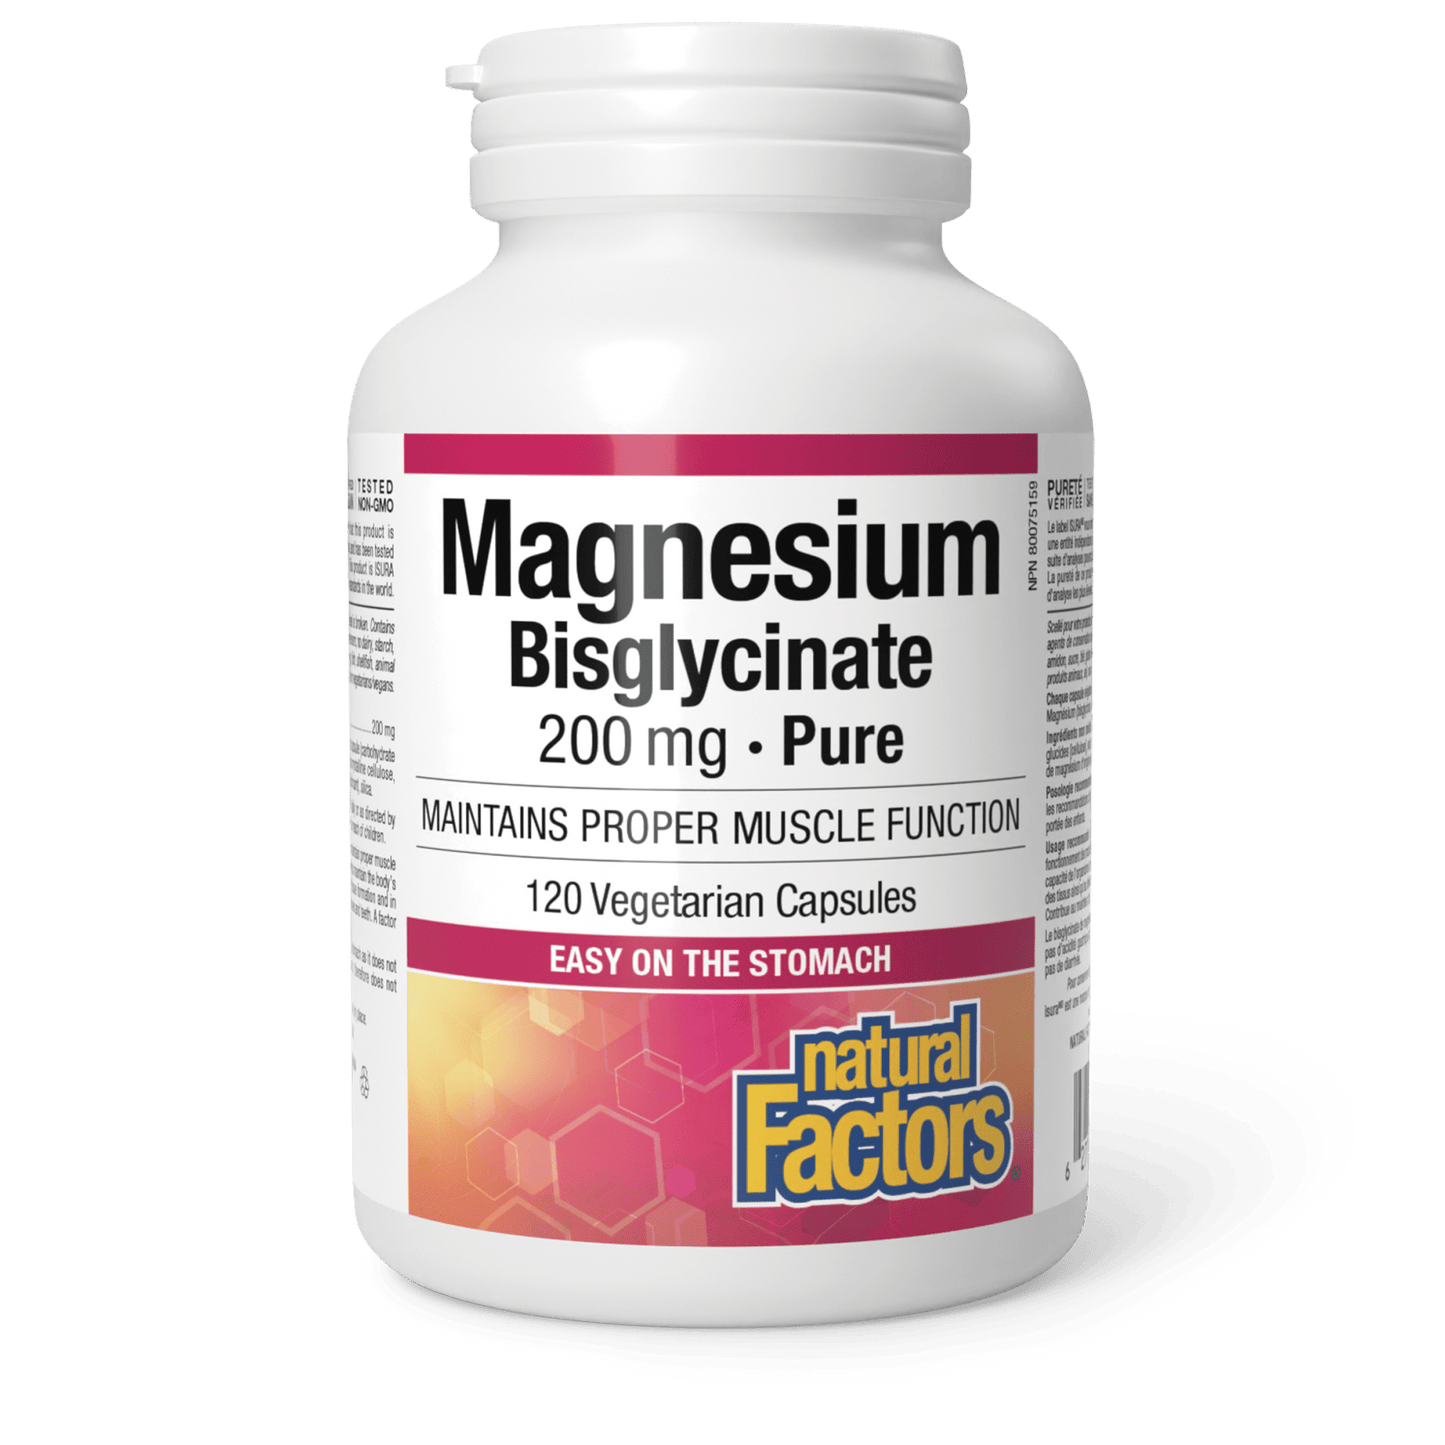 Magnesium Bisglycinate Pure 200 mg, Natural Factors|v|image|1641